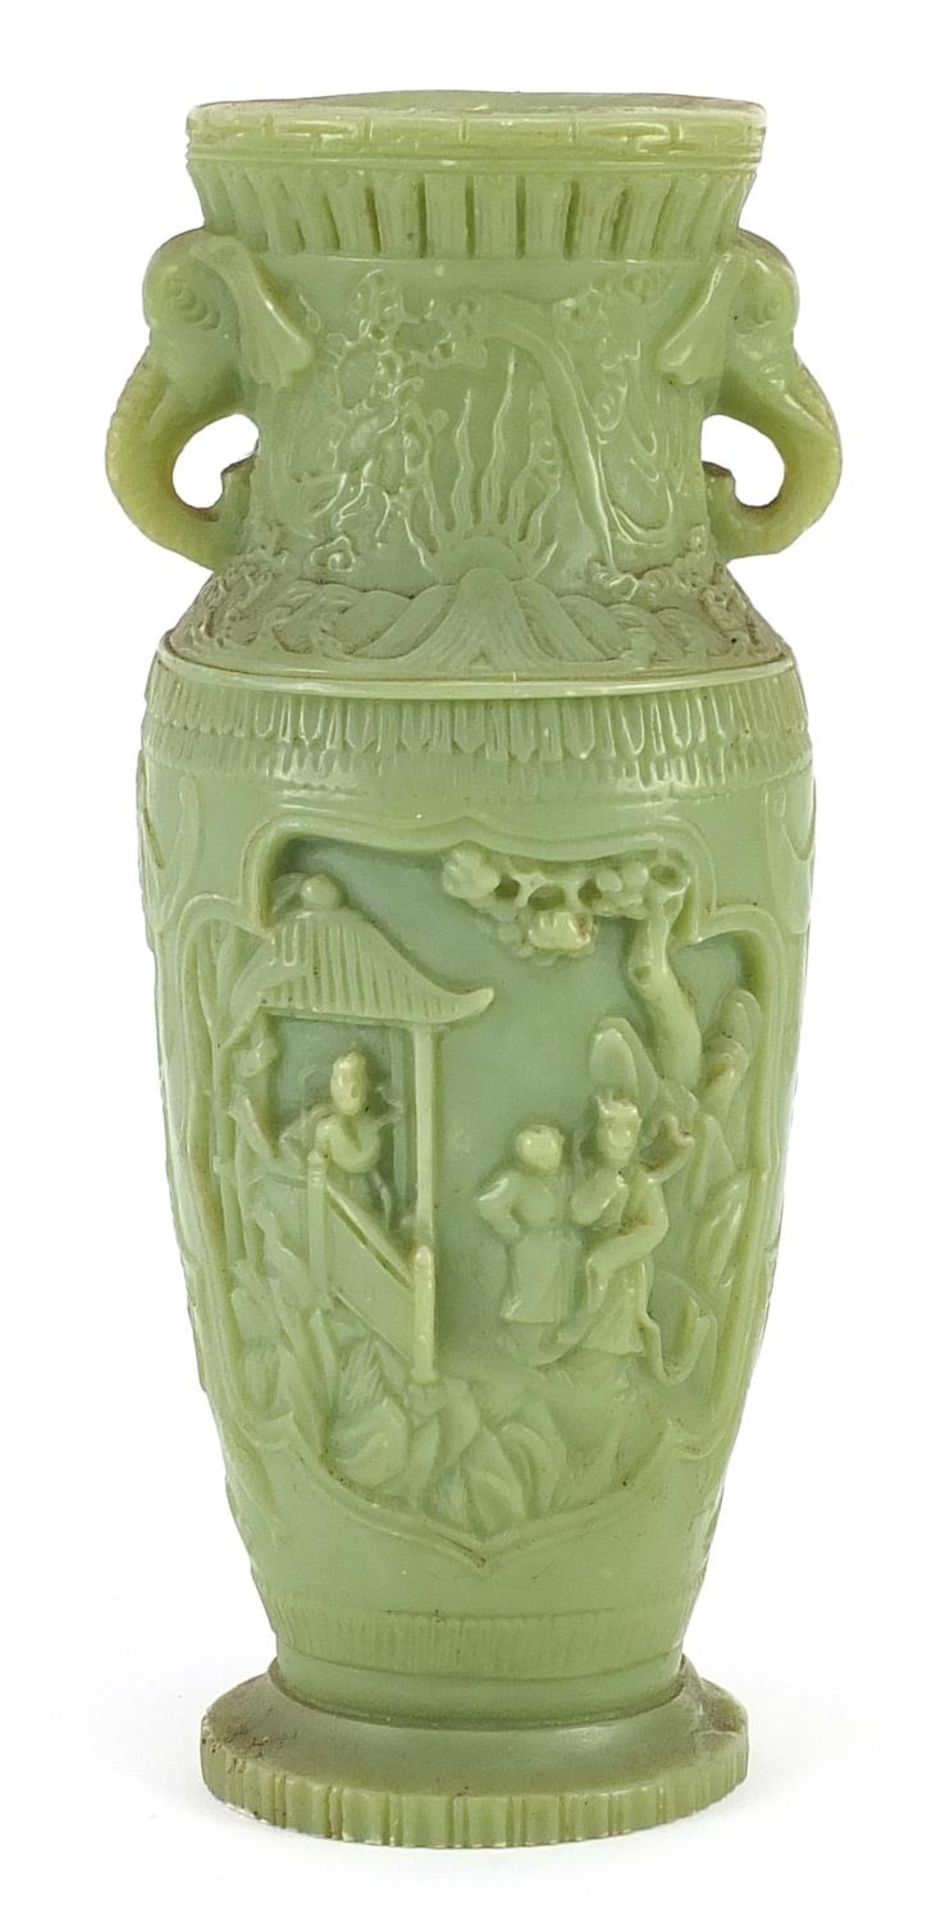 Modern Chinese jade style vase with elephant head handles, 24cm high